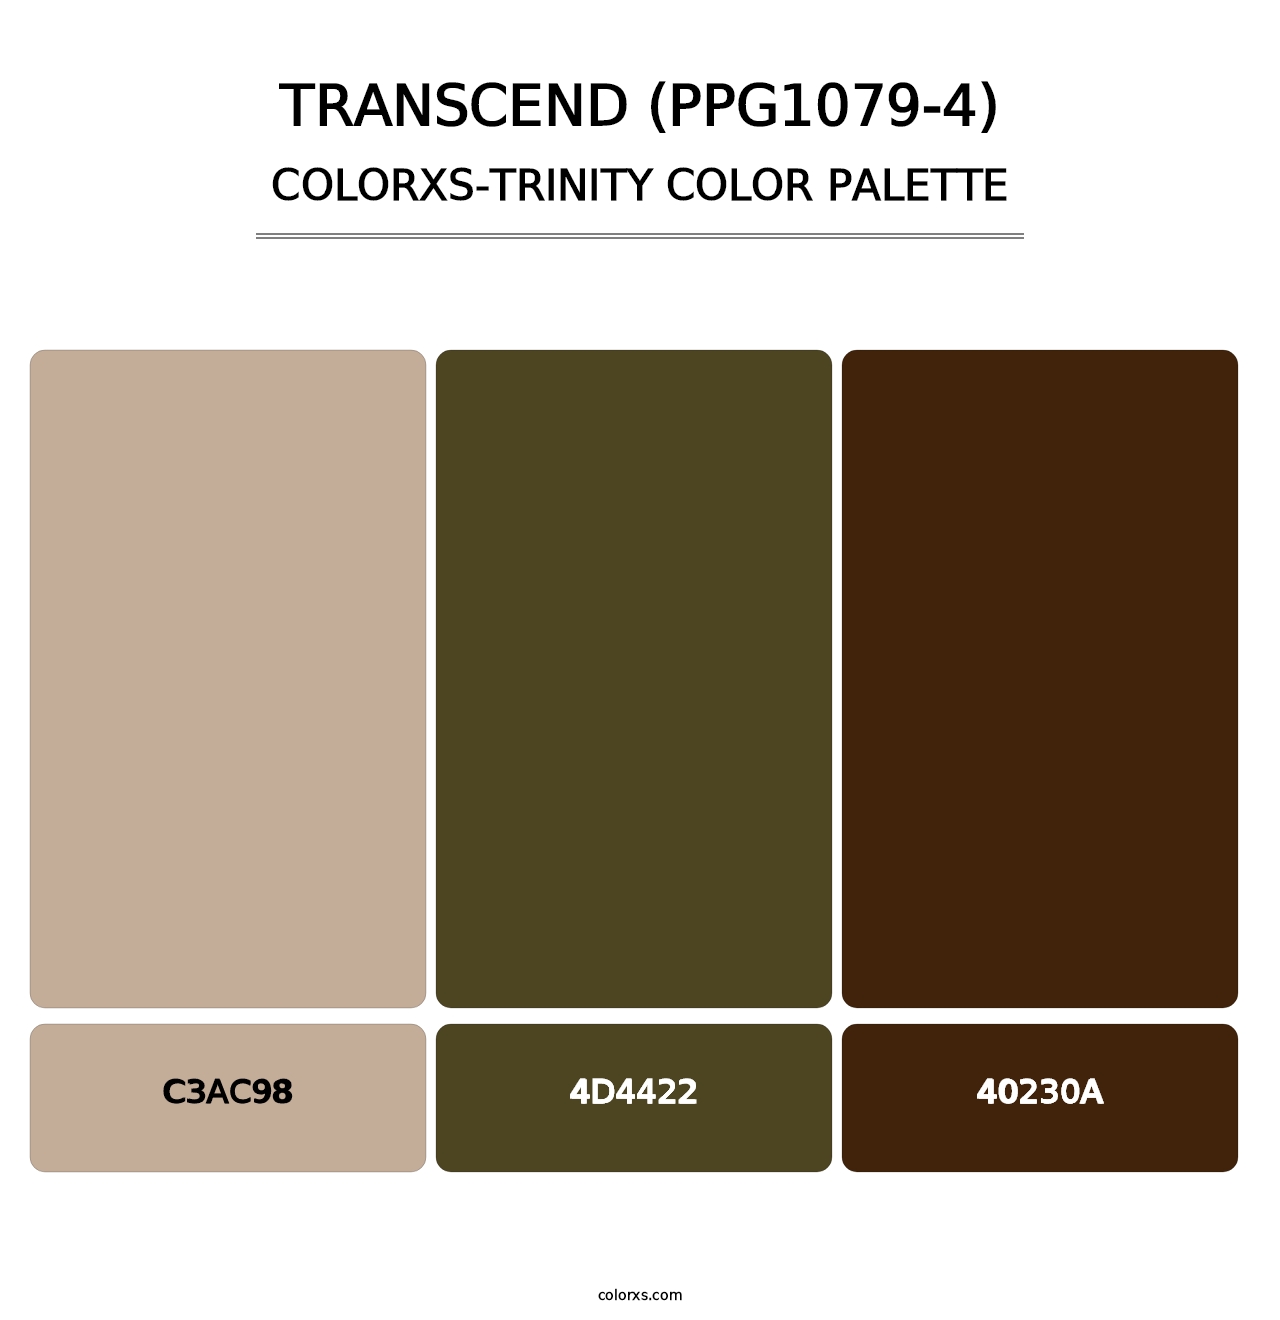 Transcend (PPG1079-4) - Colorxs Trinity Palette